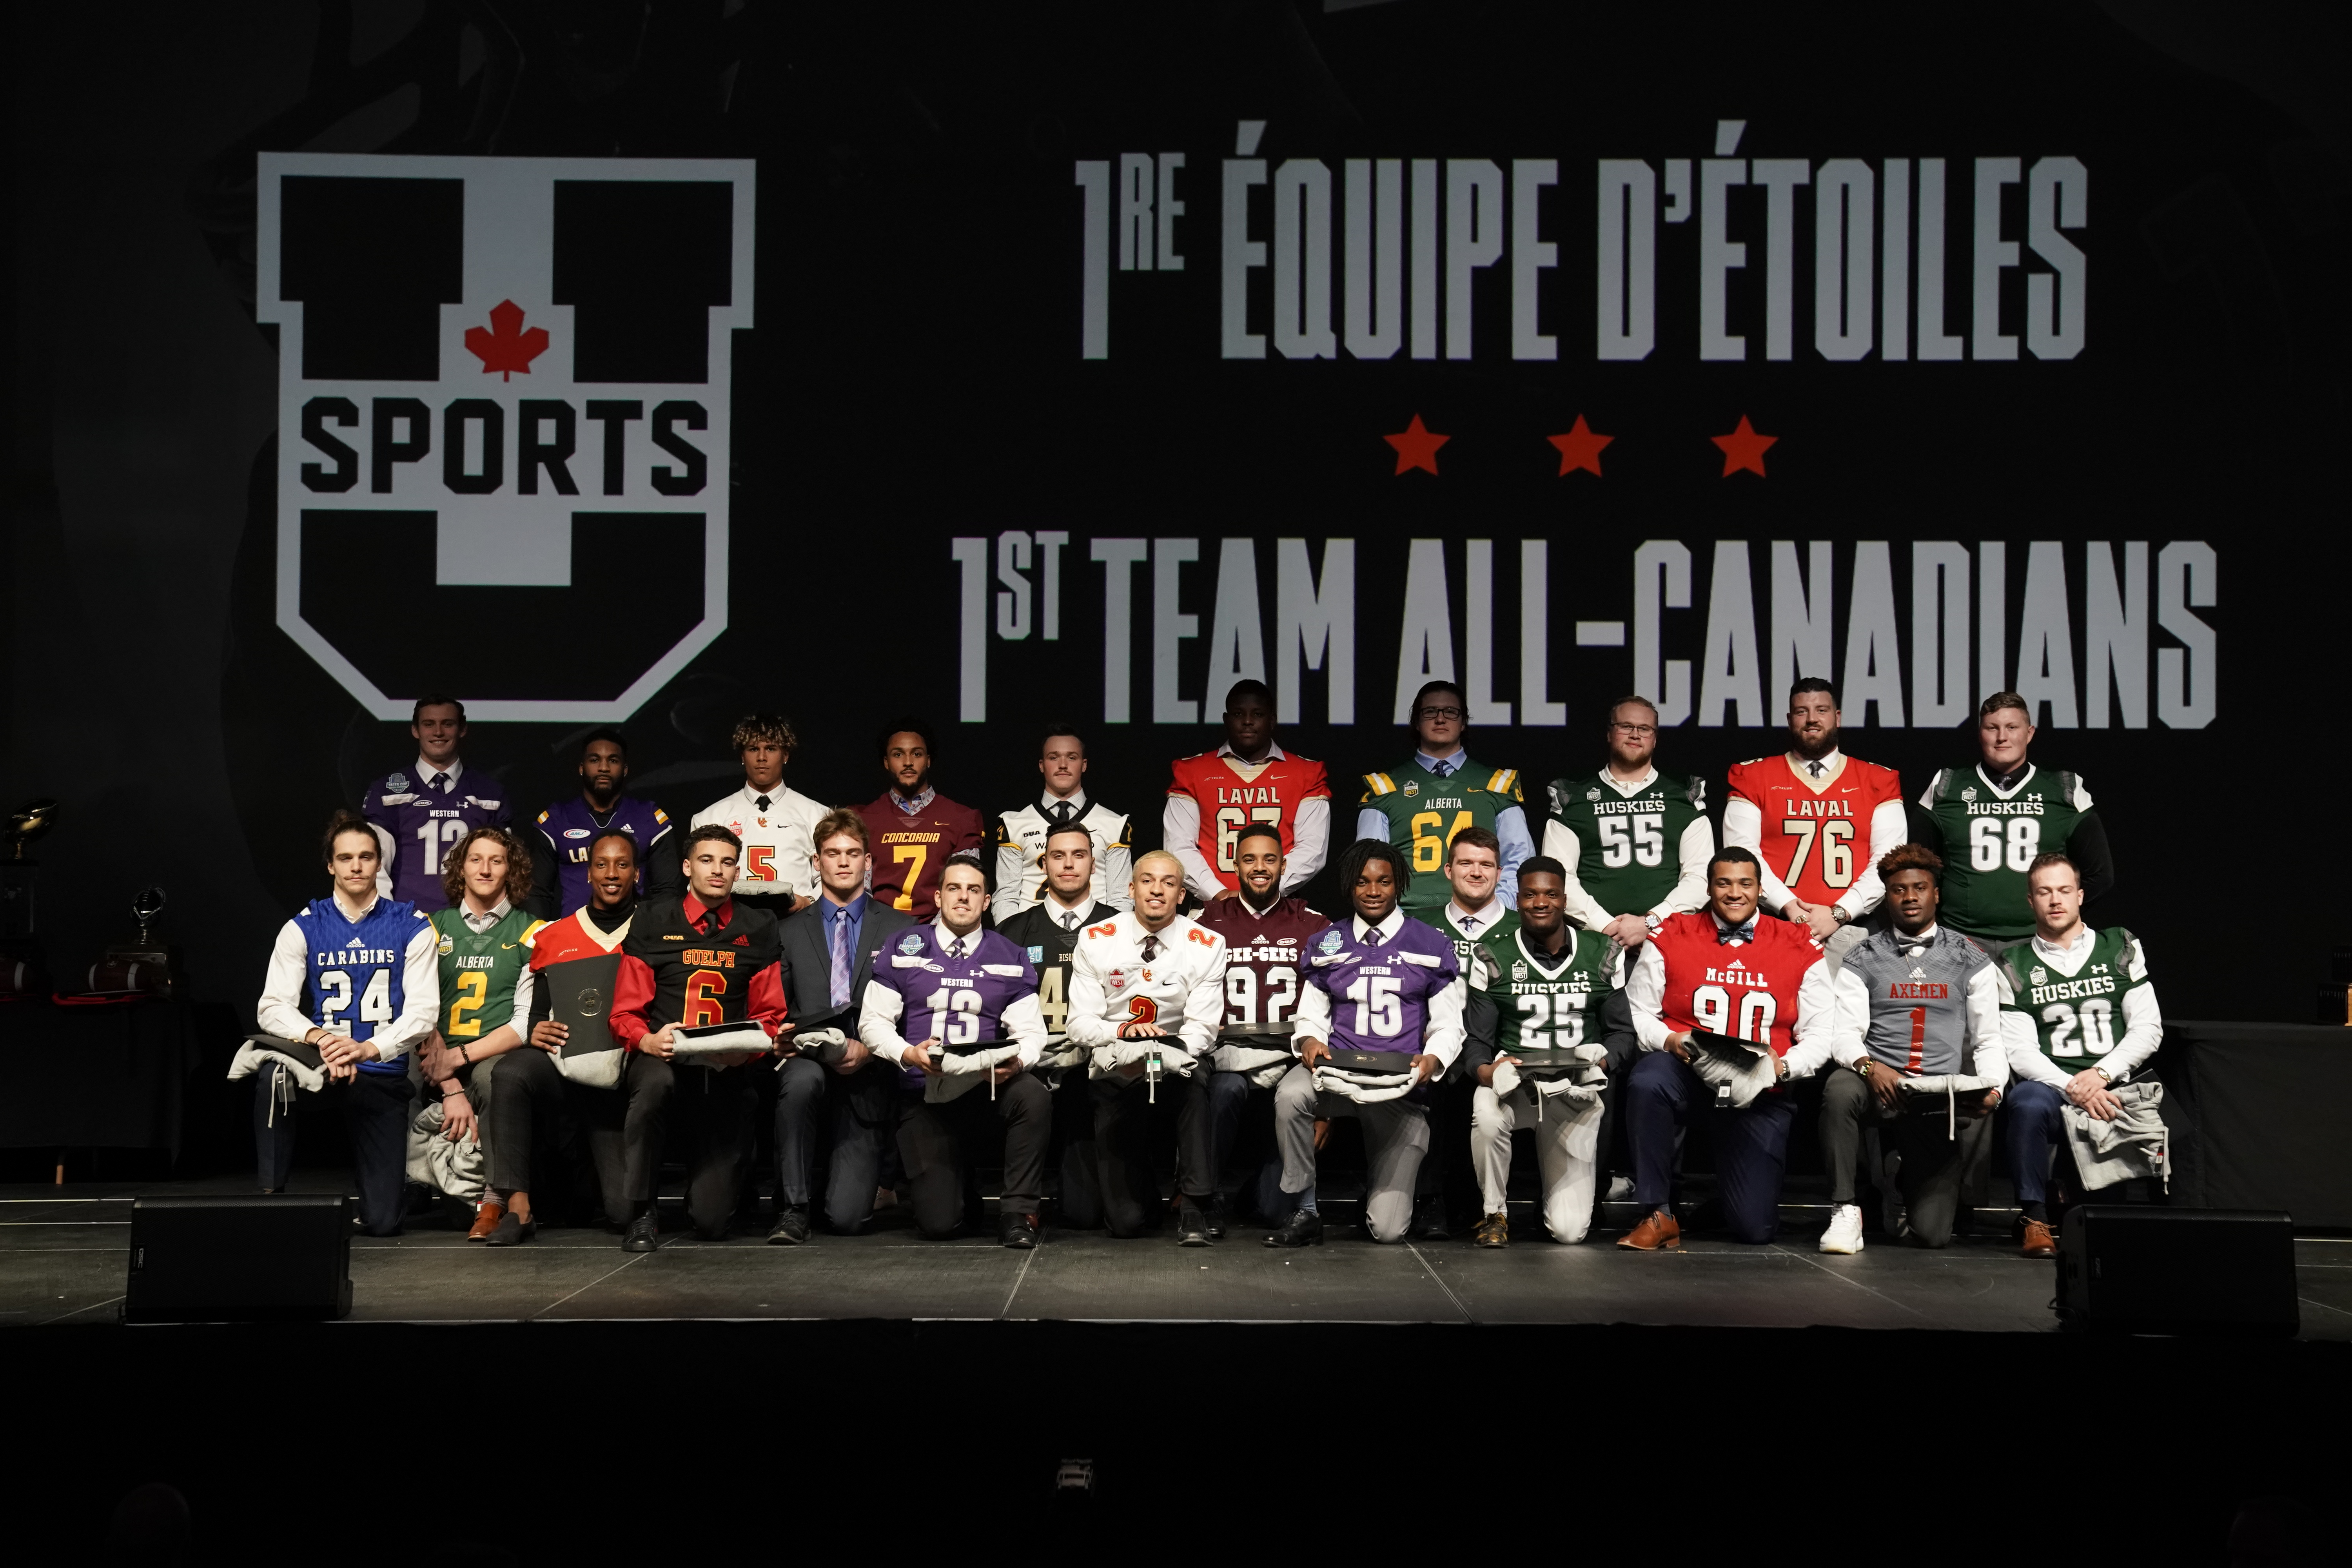 1st_Team_All-Canadians.JPG (9.92 MB)